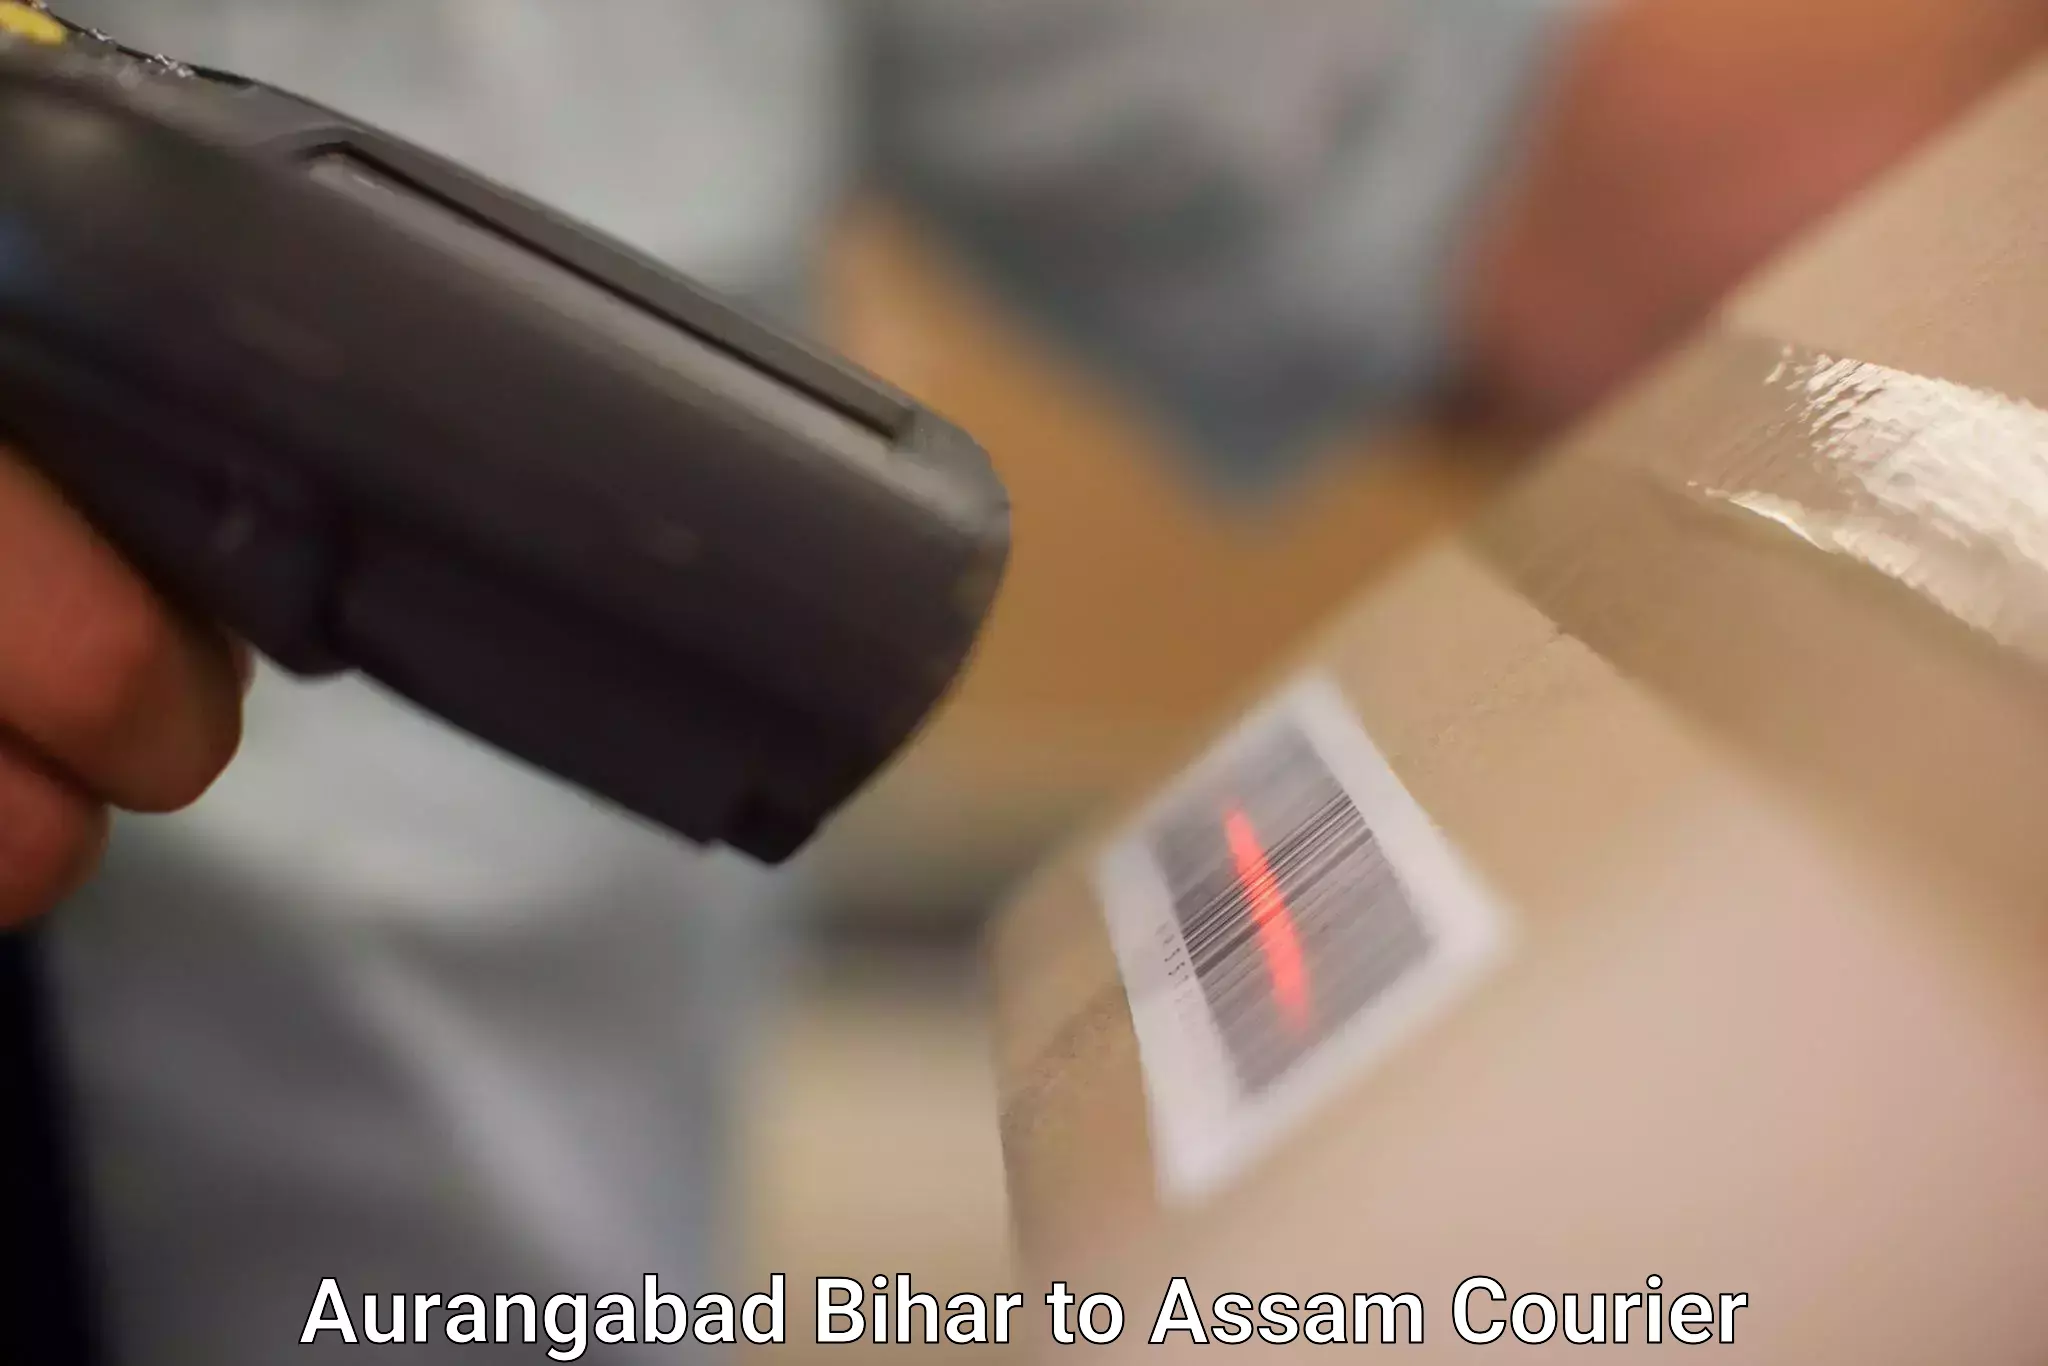 24/7 courier service in Aurangabad Bihar to Badarpur Karimganj